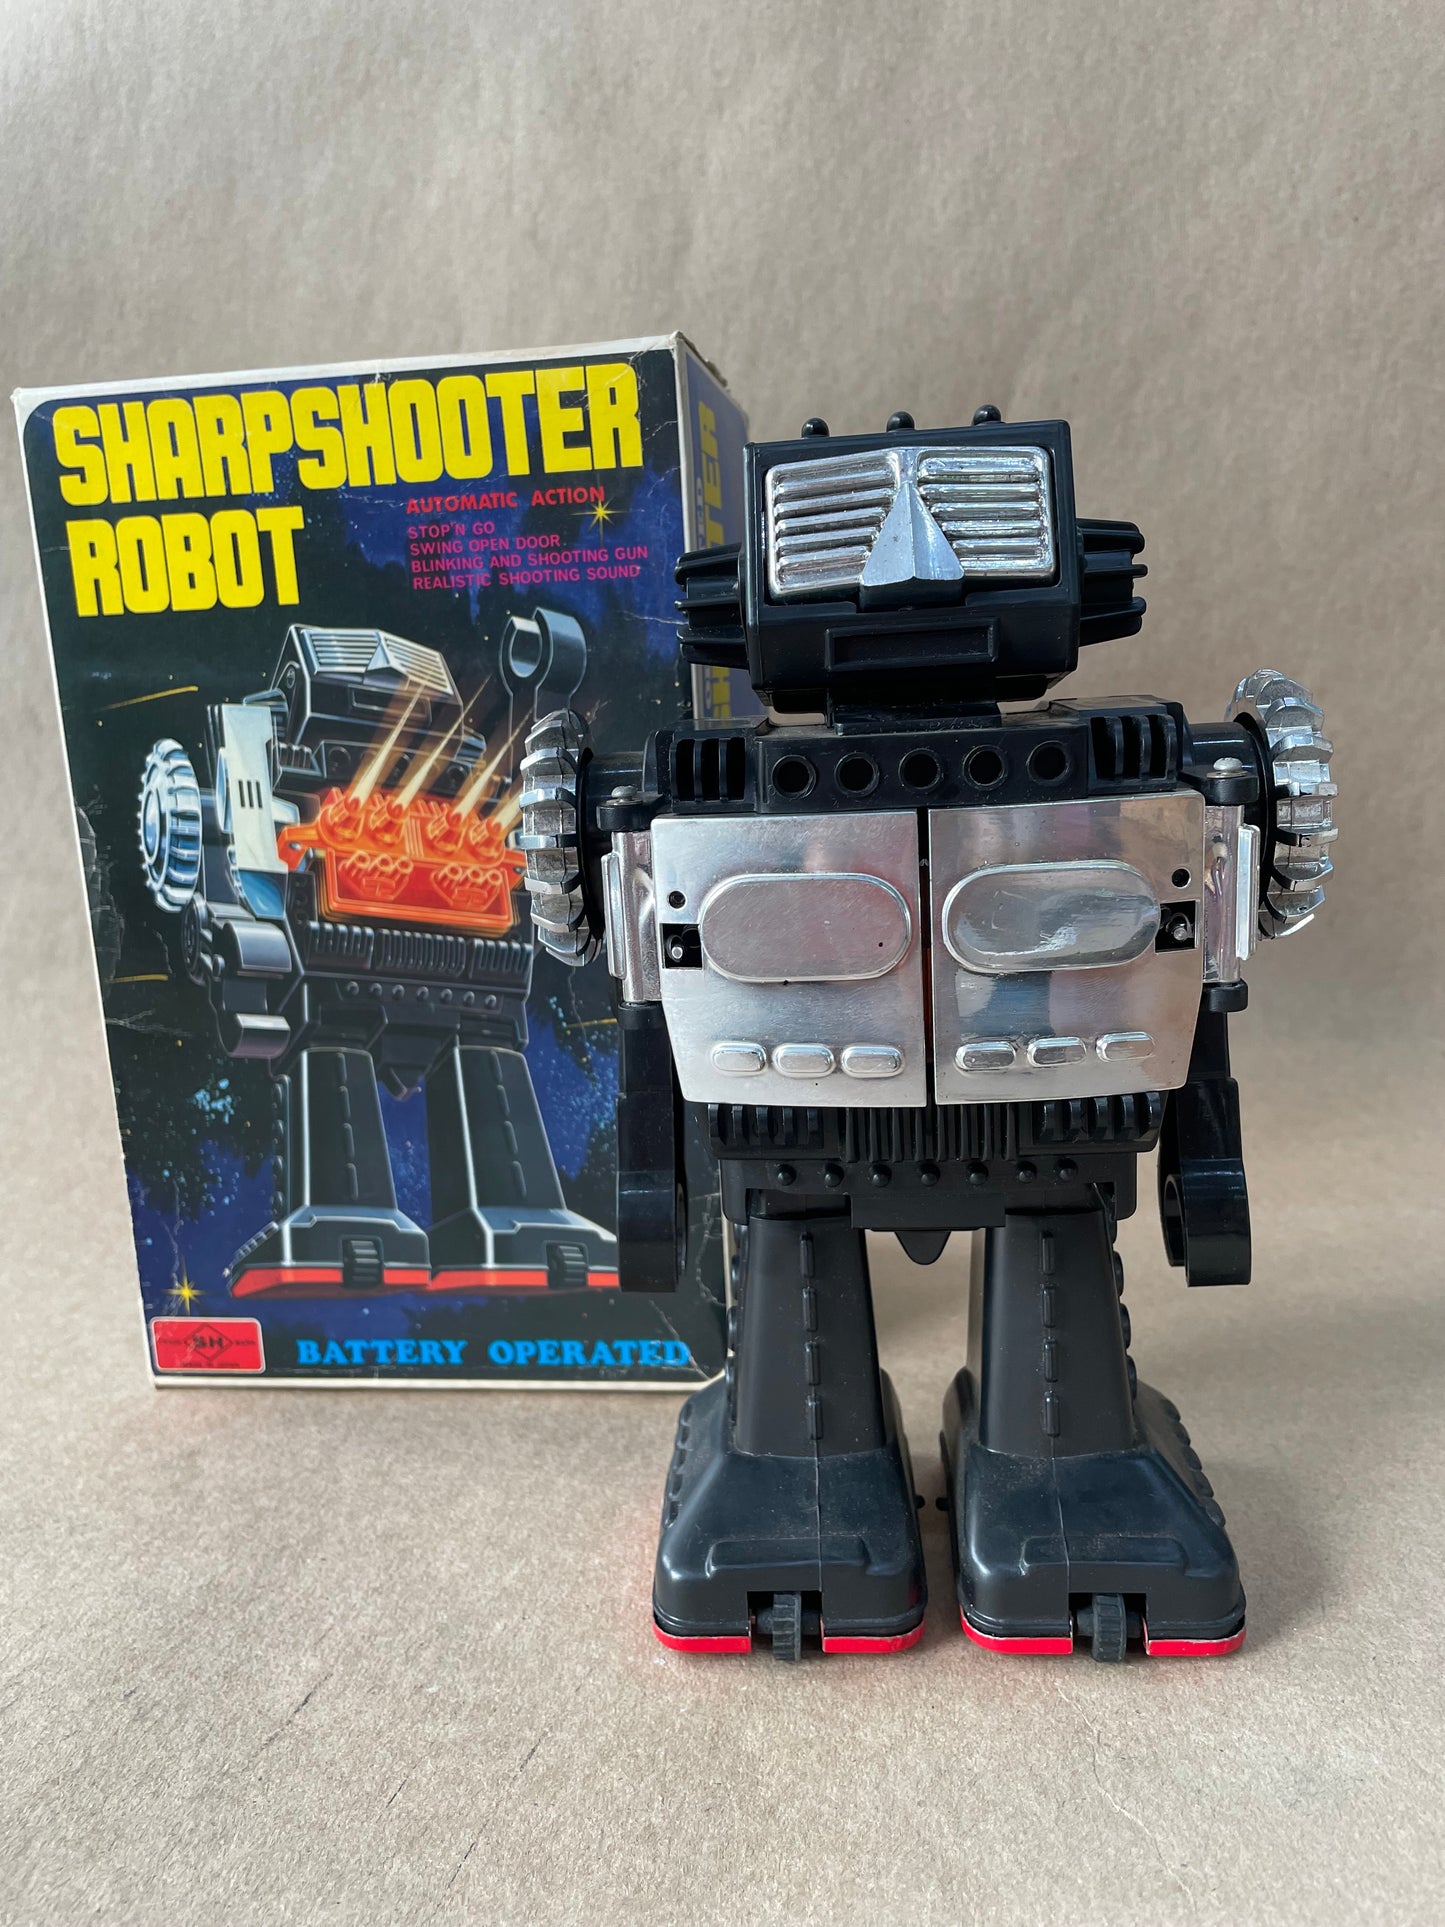 Sharpshooter Robot